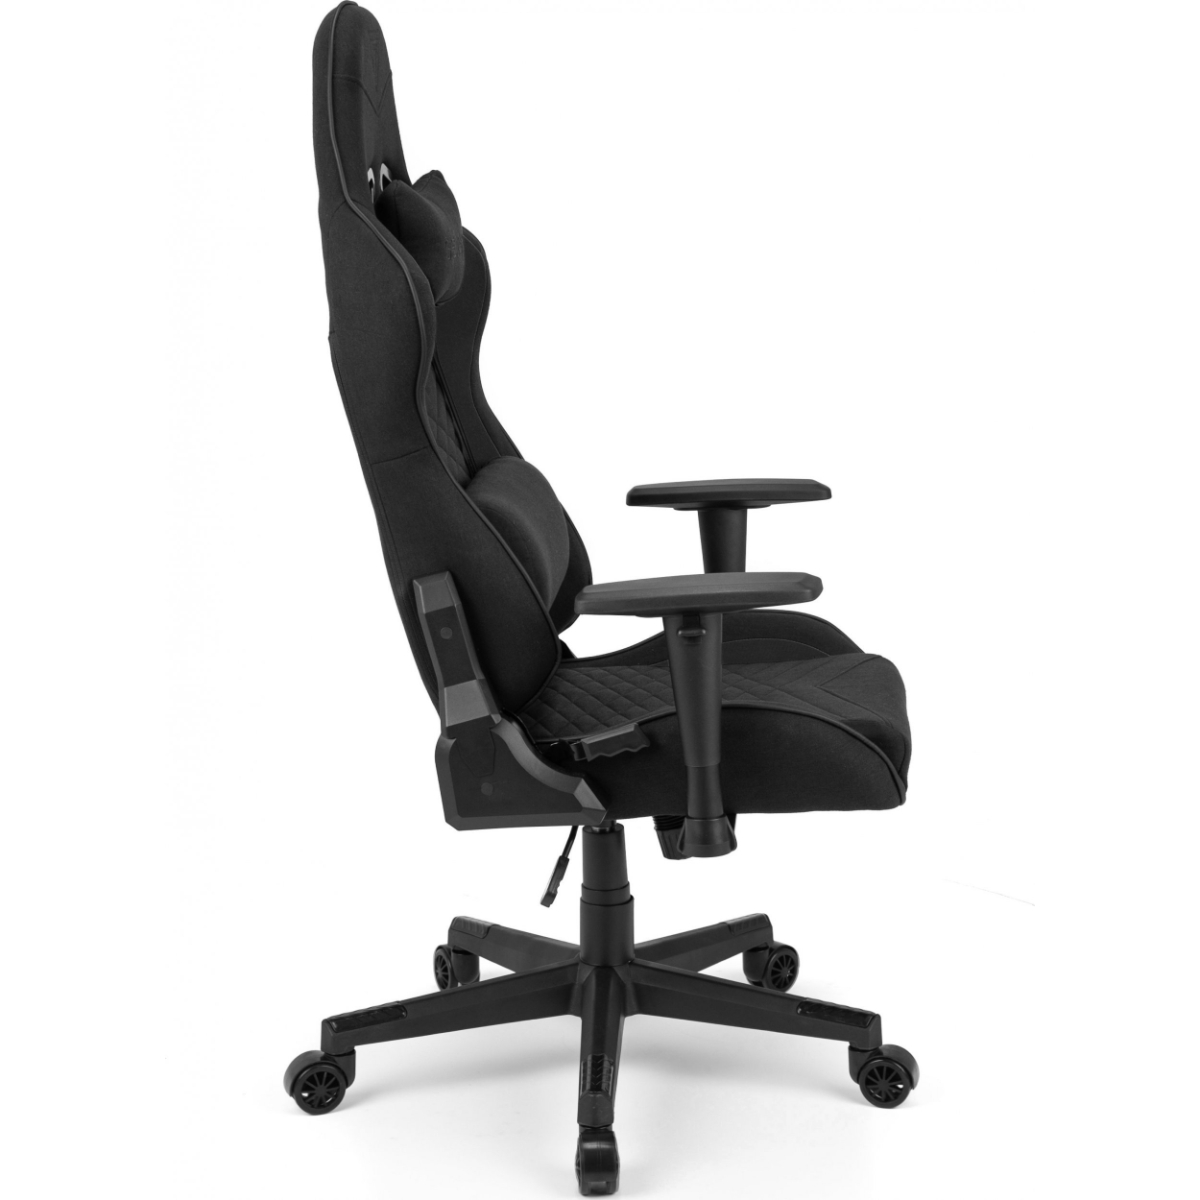 SENSE7 Spellcaster Gaming Fabric Stühle, schwarz